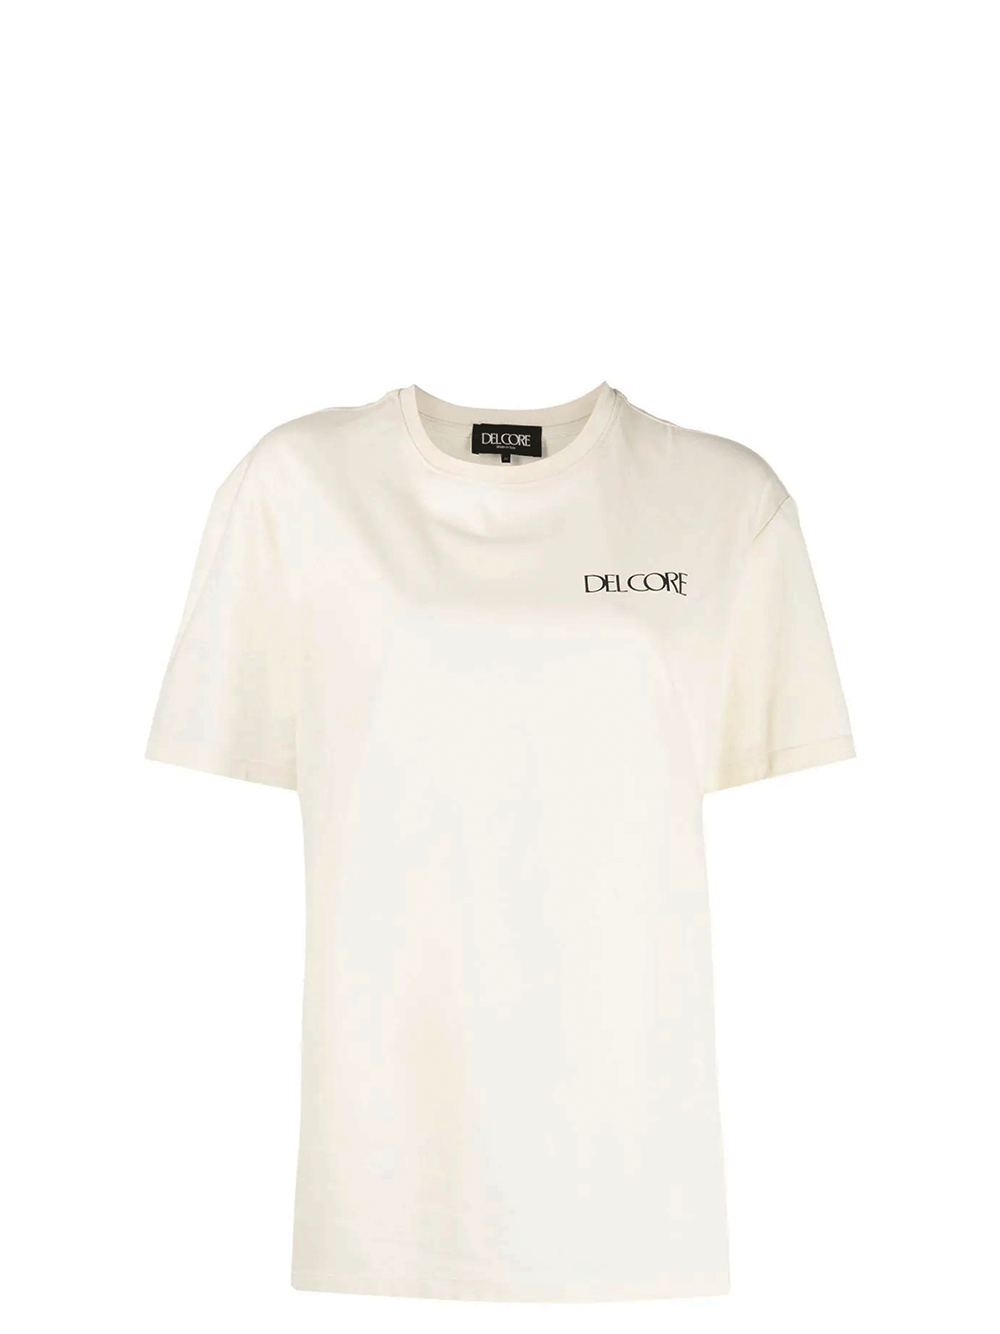 Del Core T-Shirt With Mushroom Print White 1